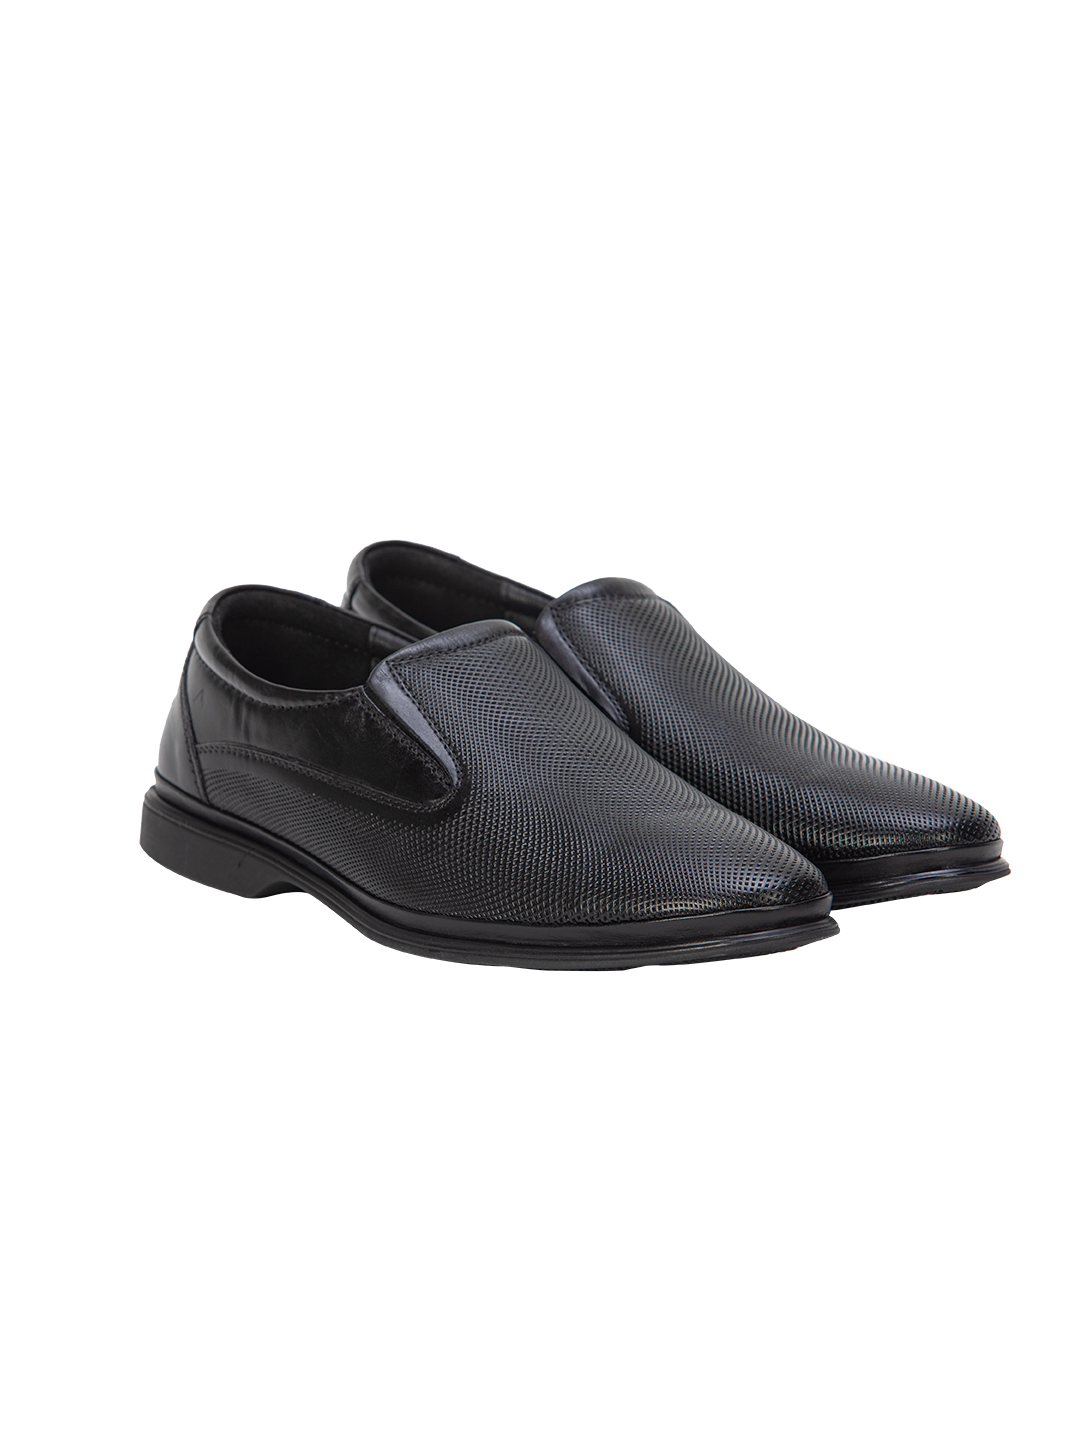 Buy Von Wellx Germany Comfort Mondaine Casual Black Shoes Online in Dhanbad